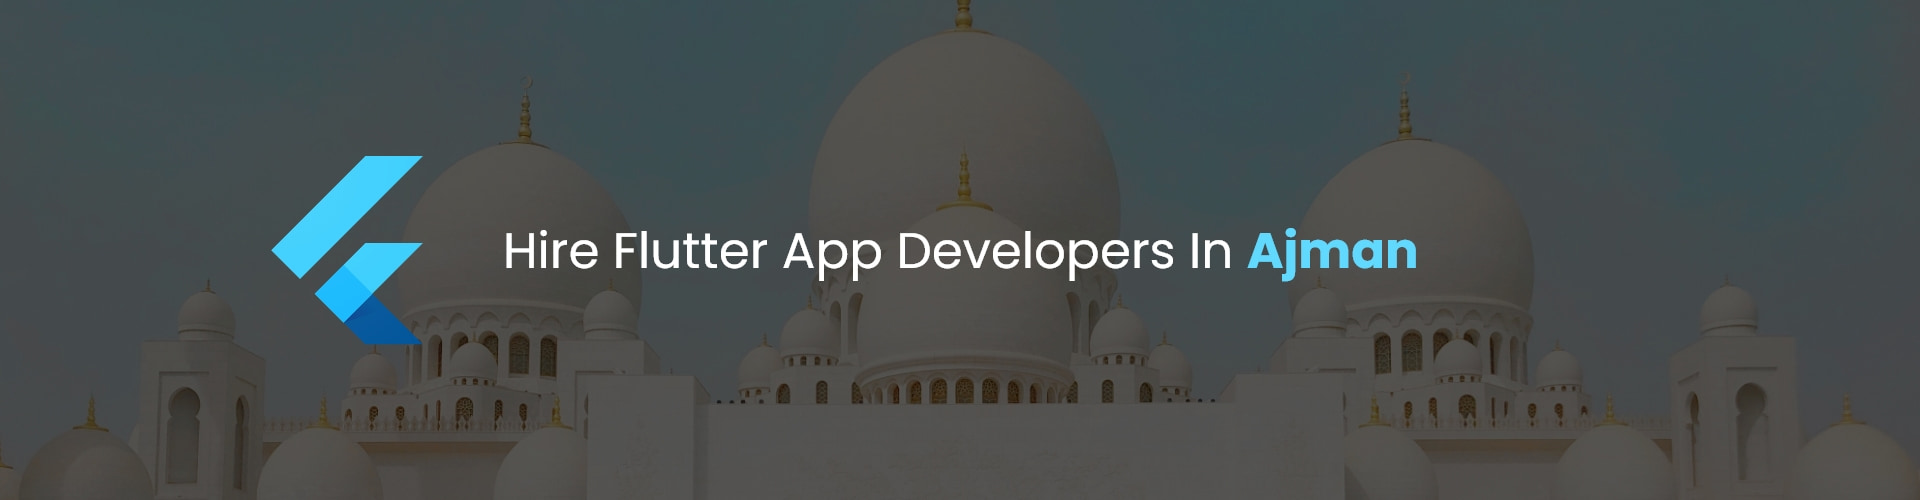 hire flutter app developers in ajman